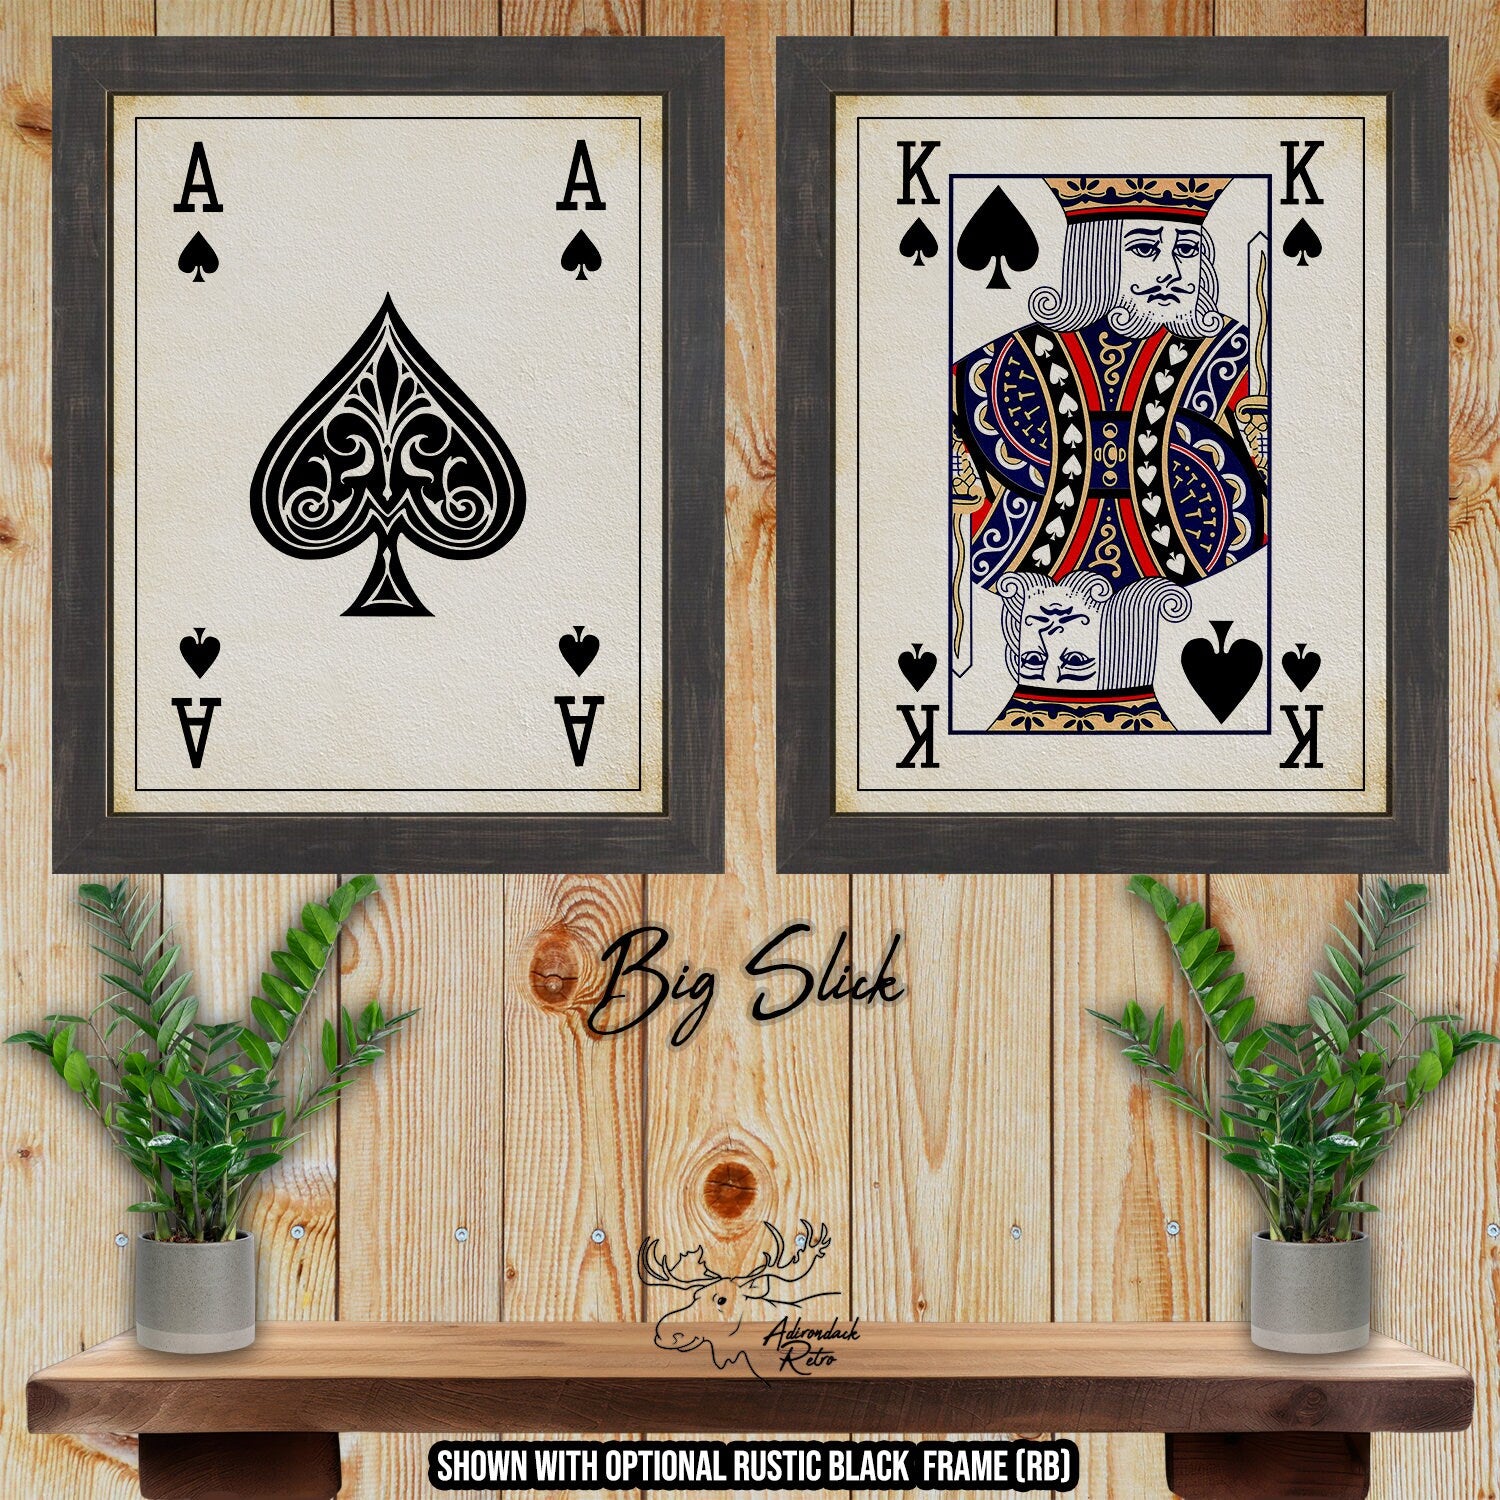 Ace and King of Spades Playing Card Fine Art Prints - Big Slick Poker Card Posters at Adirondack Retro